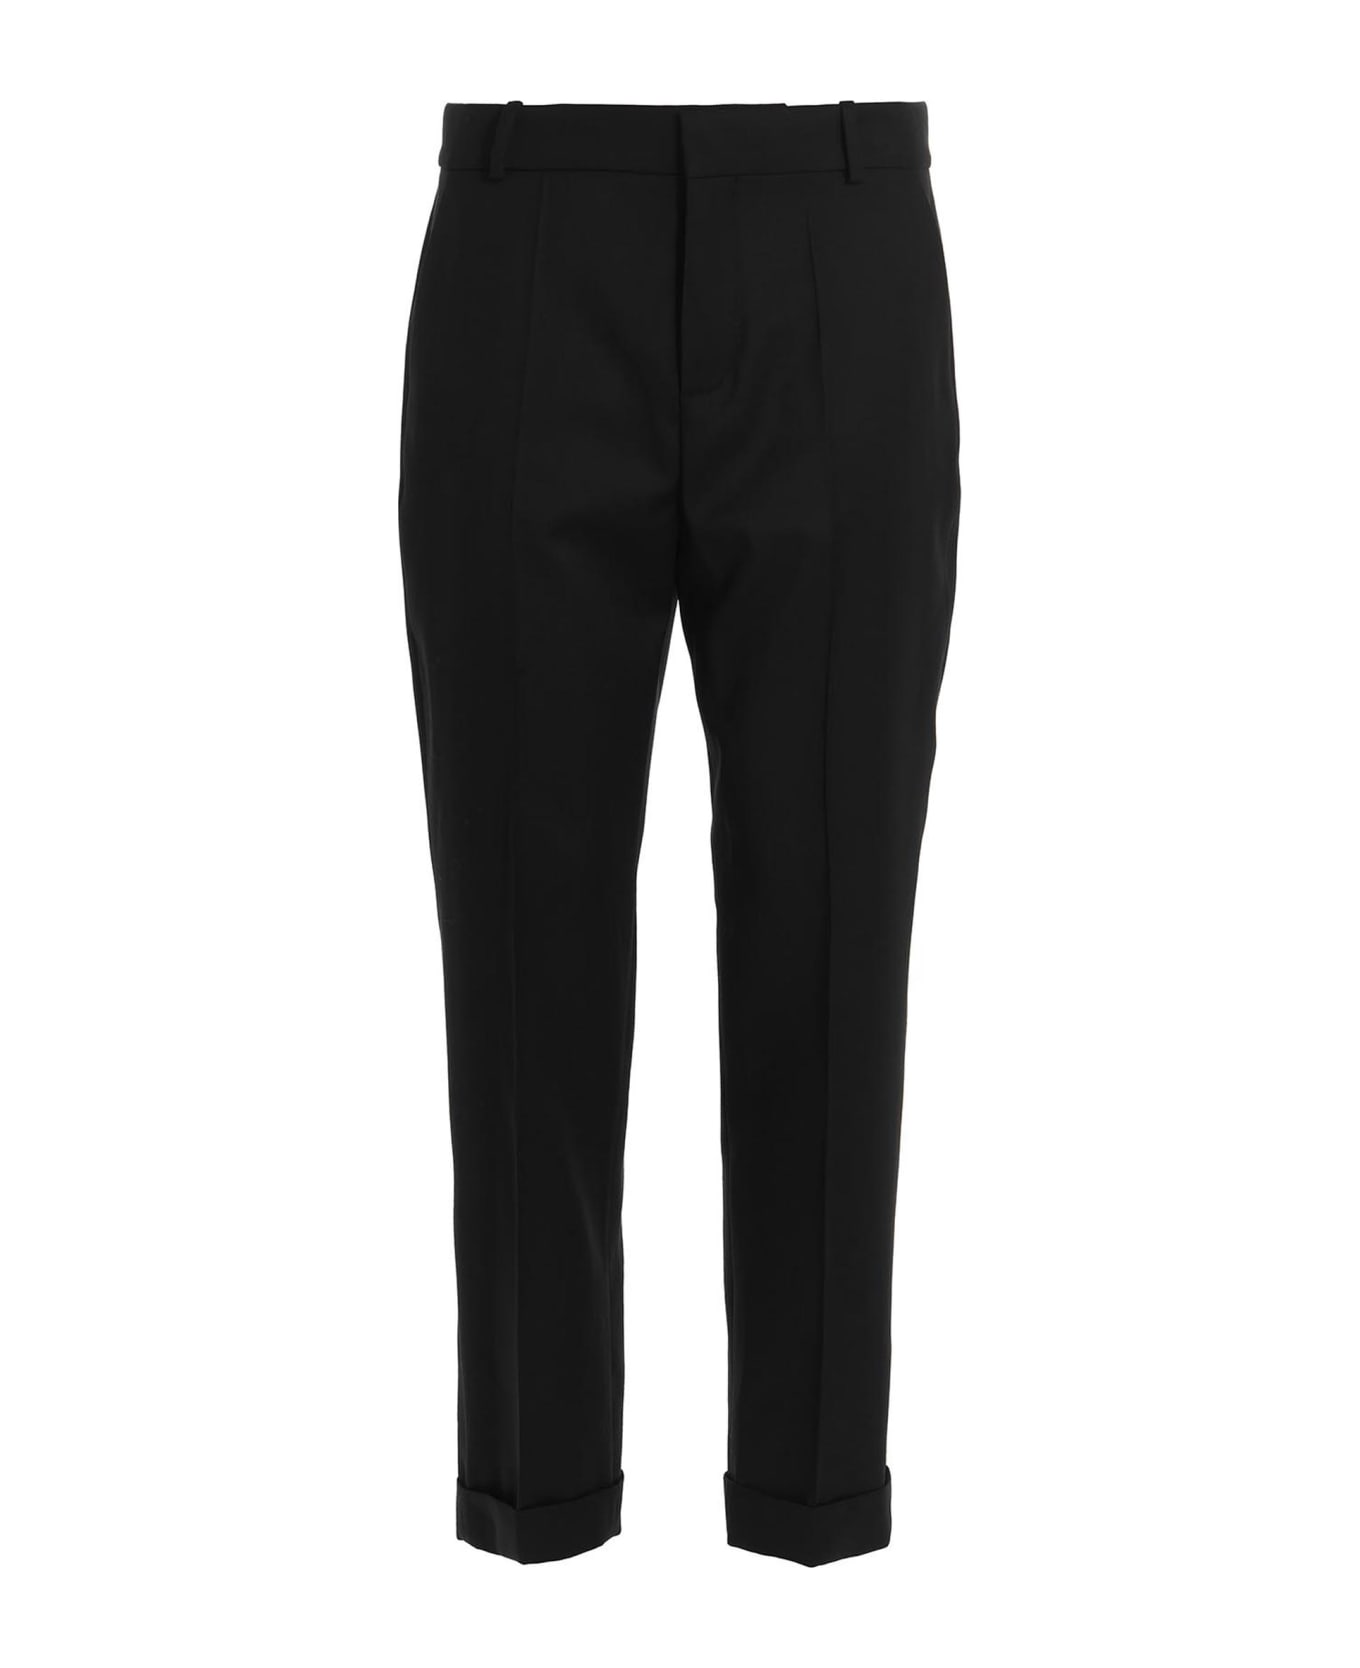 Balmain Pants In Black Wool - Black ボトムス